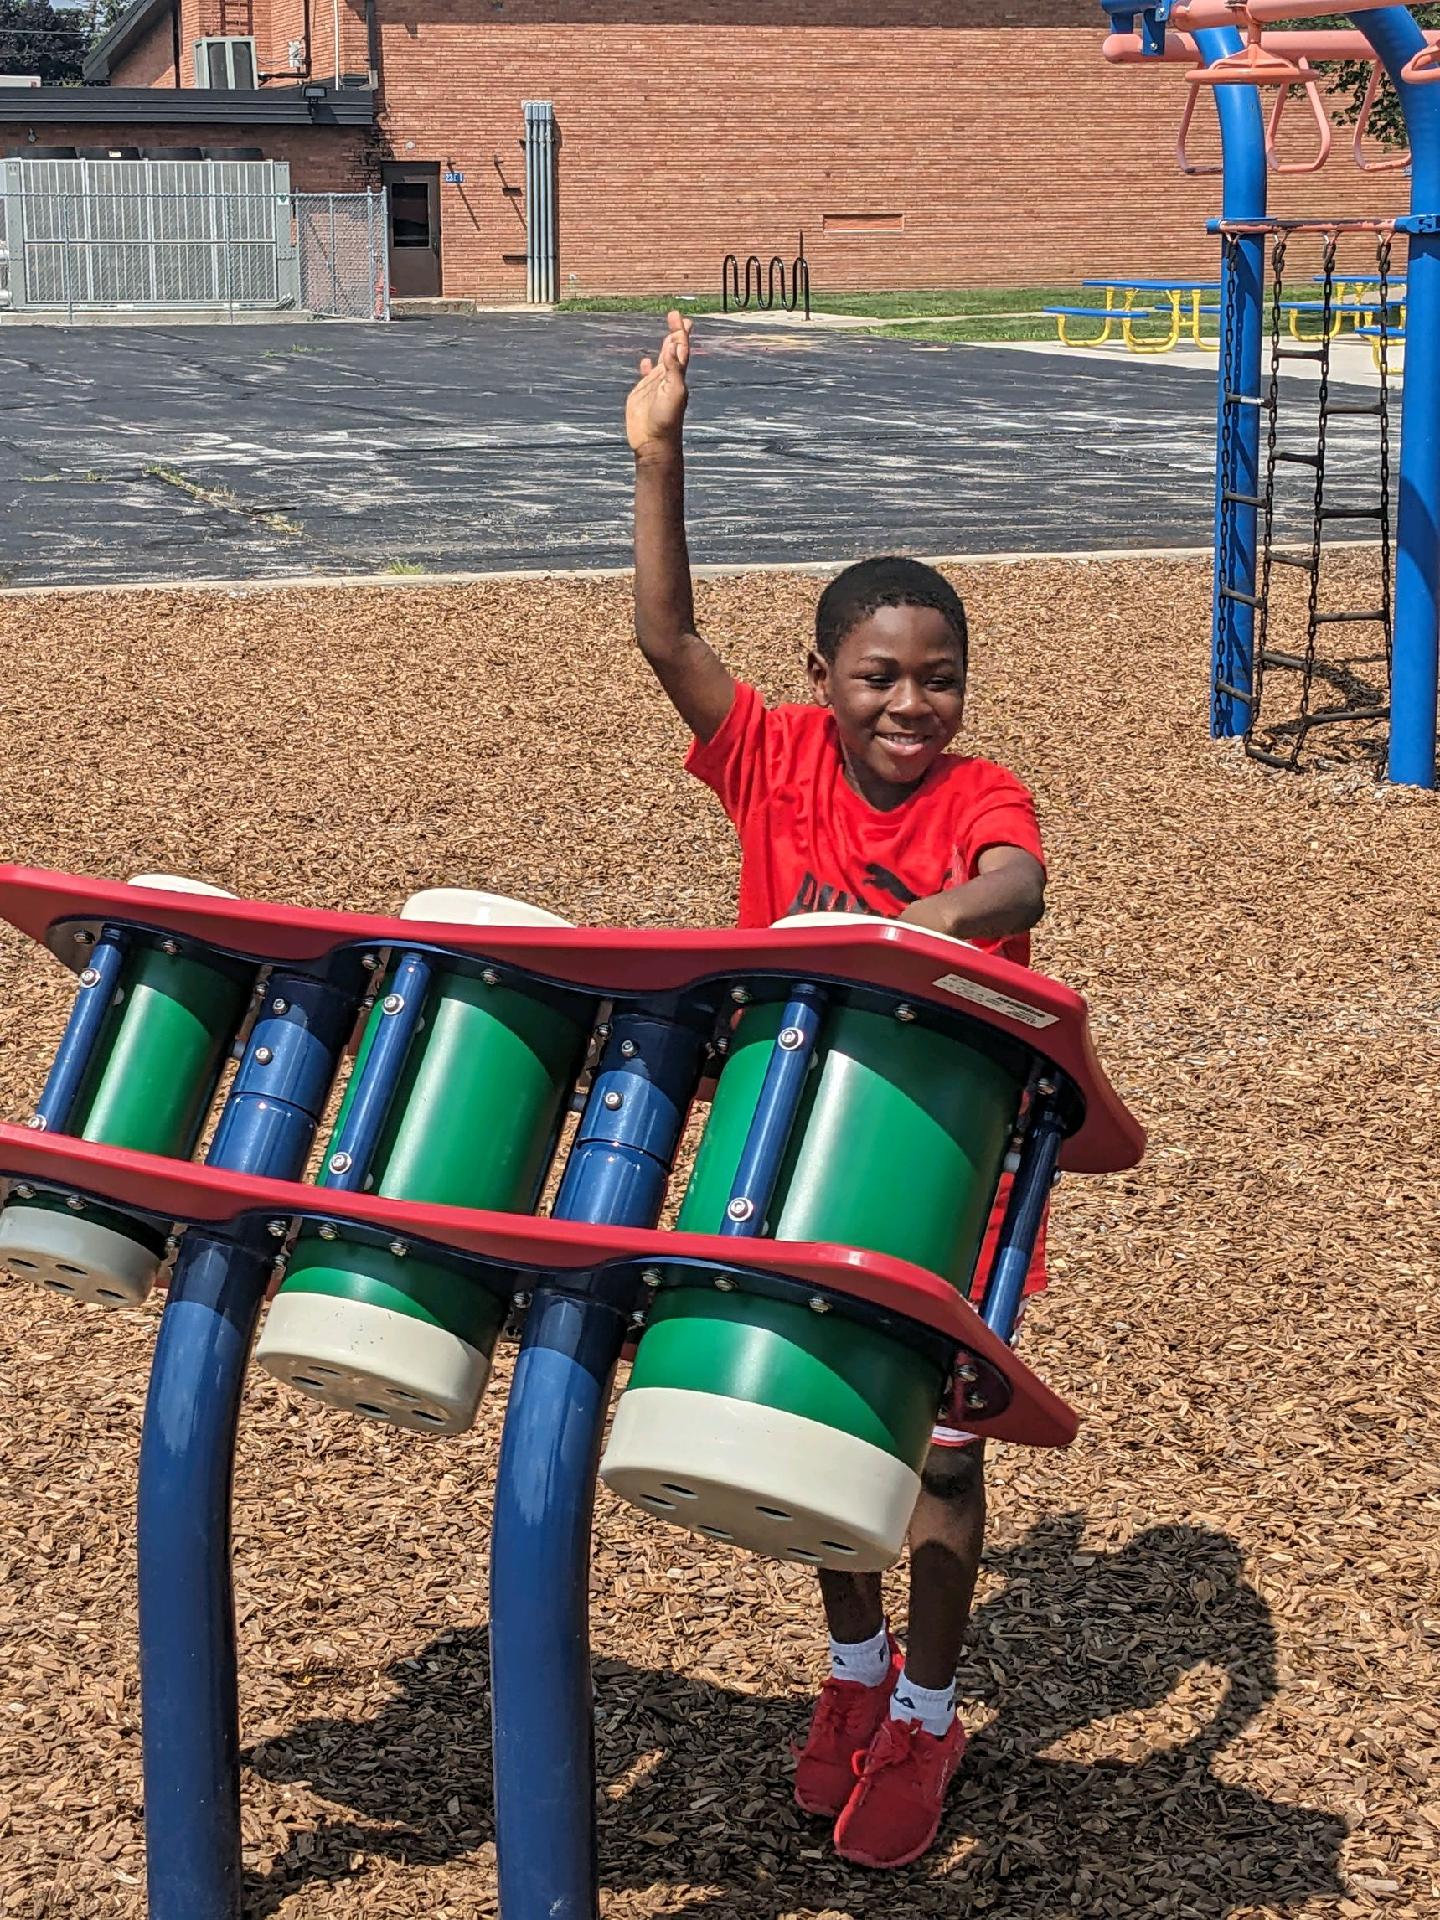 Having fun on the playground!